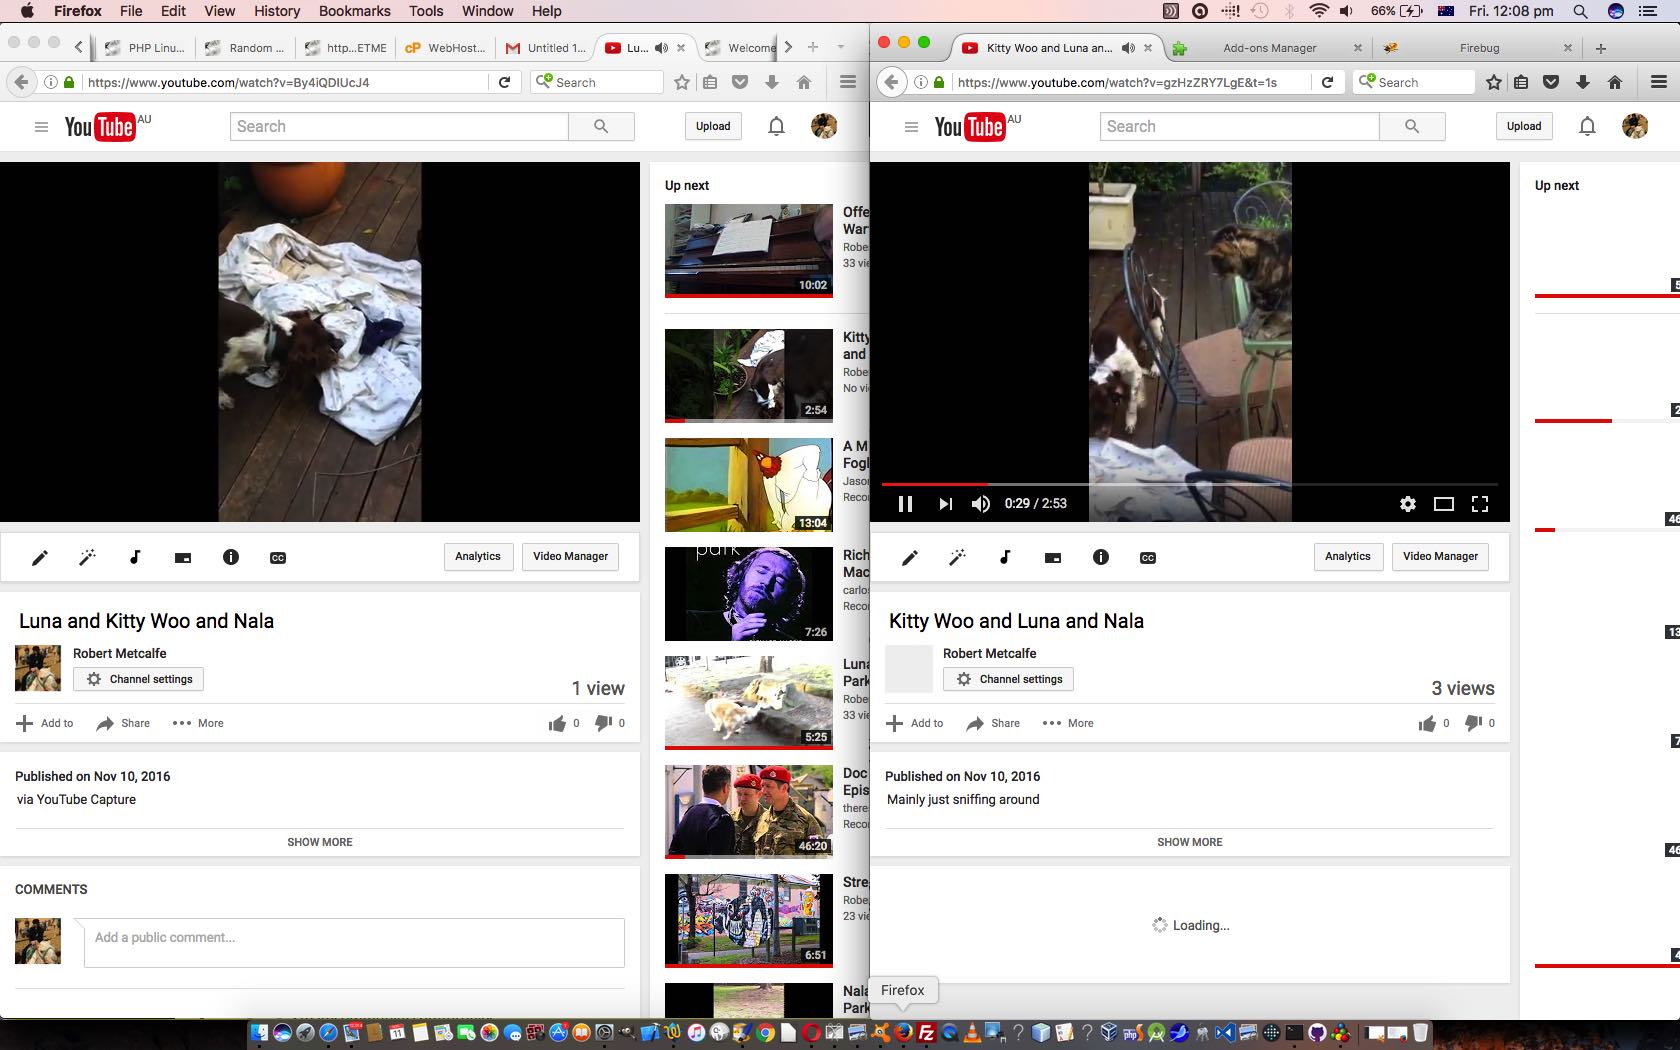 YouTube via iPad Video Editing Tutorial